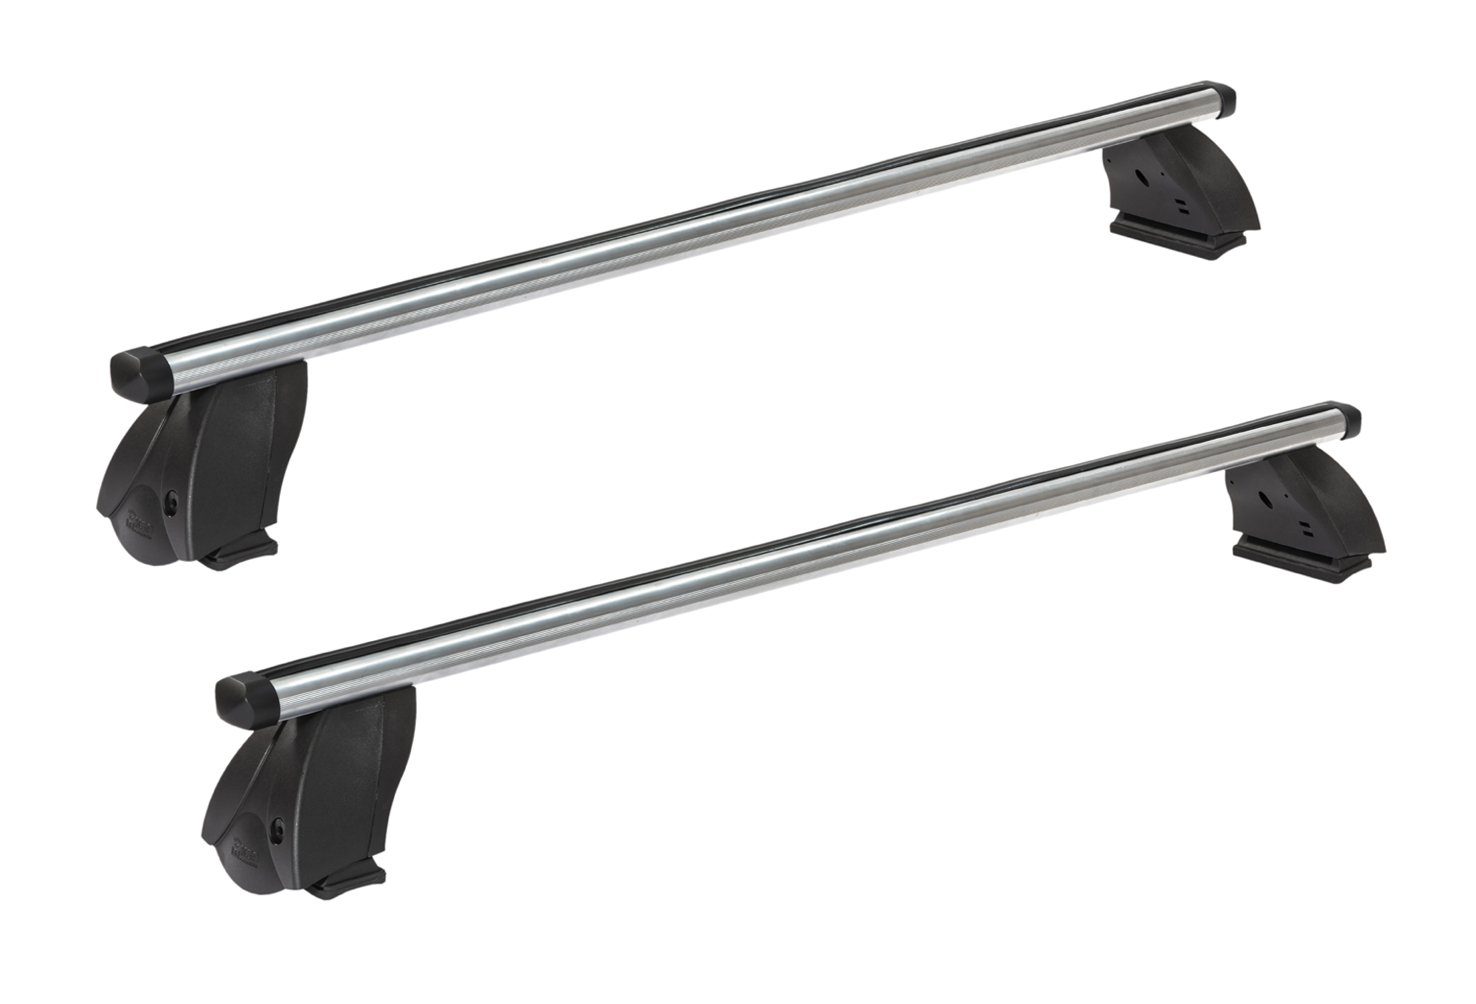 Paar PRO (5Türer) VDP-S4 kompatibel mit 05 Ski VDP Fiat Skiträger 4 K1 + Dachträger ab Idea Dachträger, Aluminium